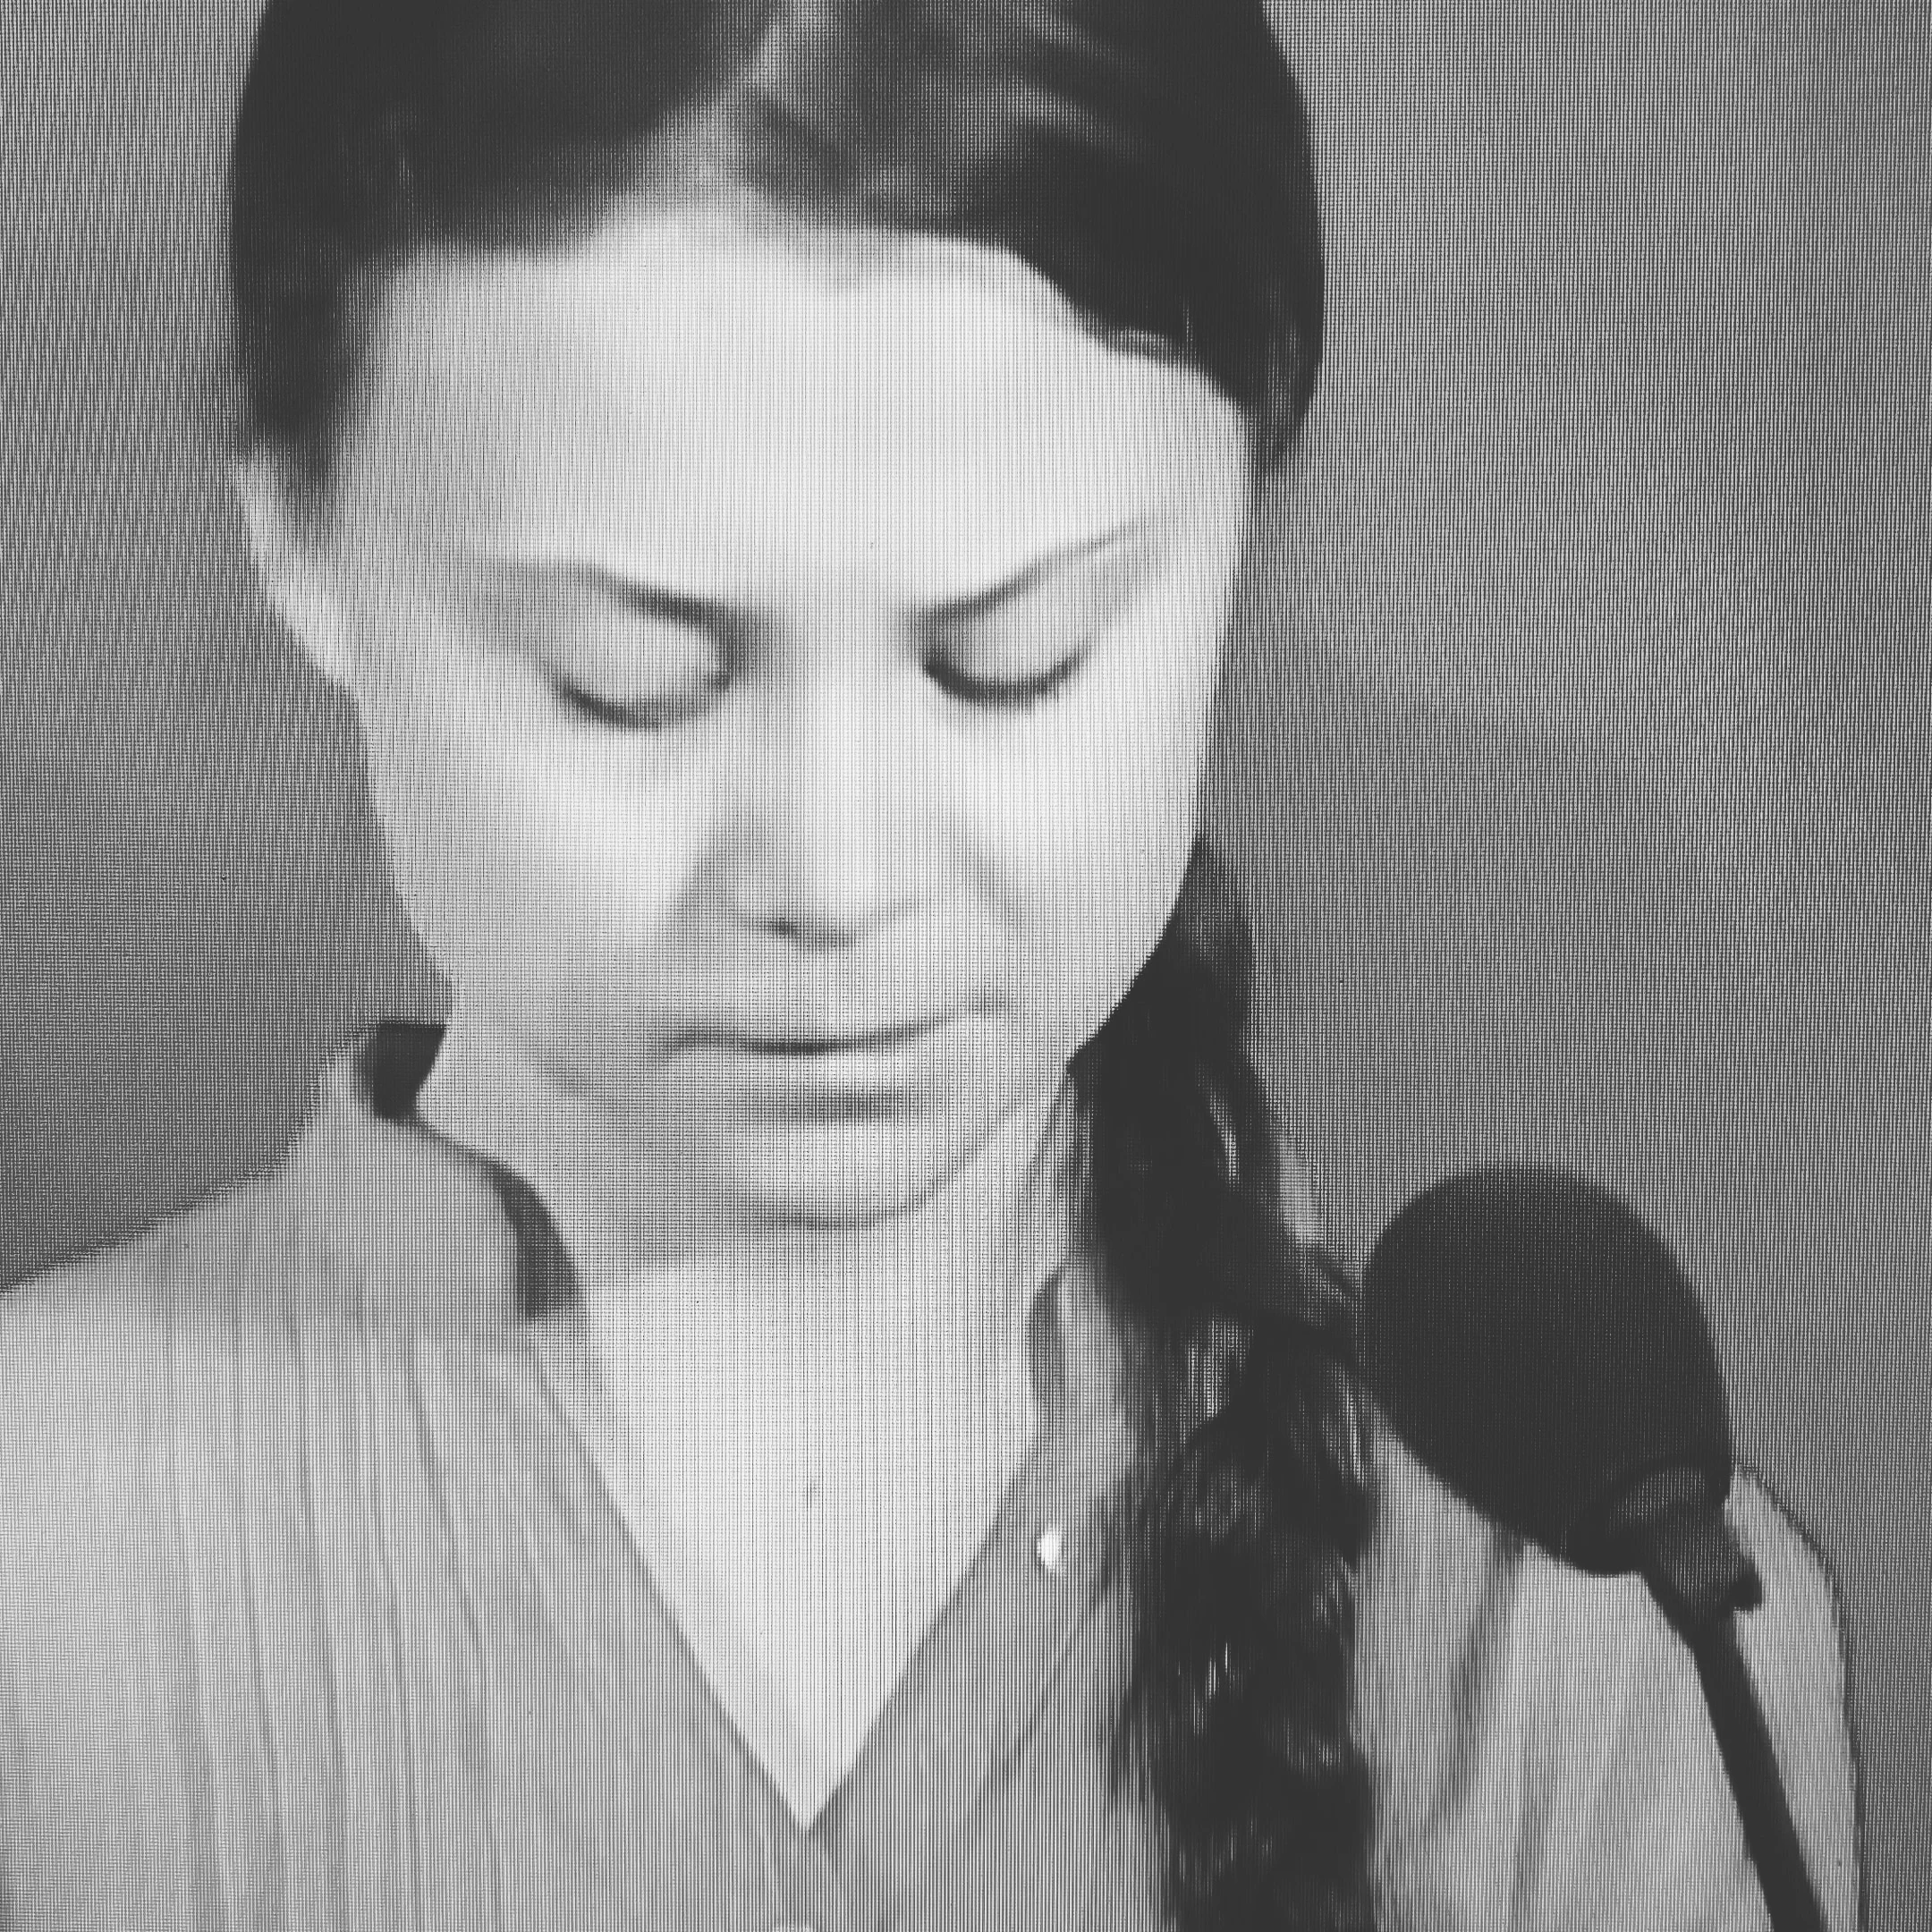 Greta Thunberg addresses the UN / by Rory Storm.